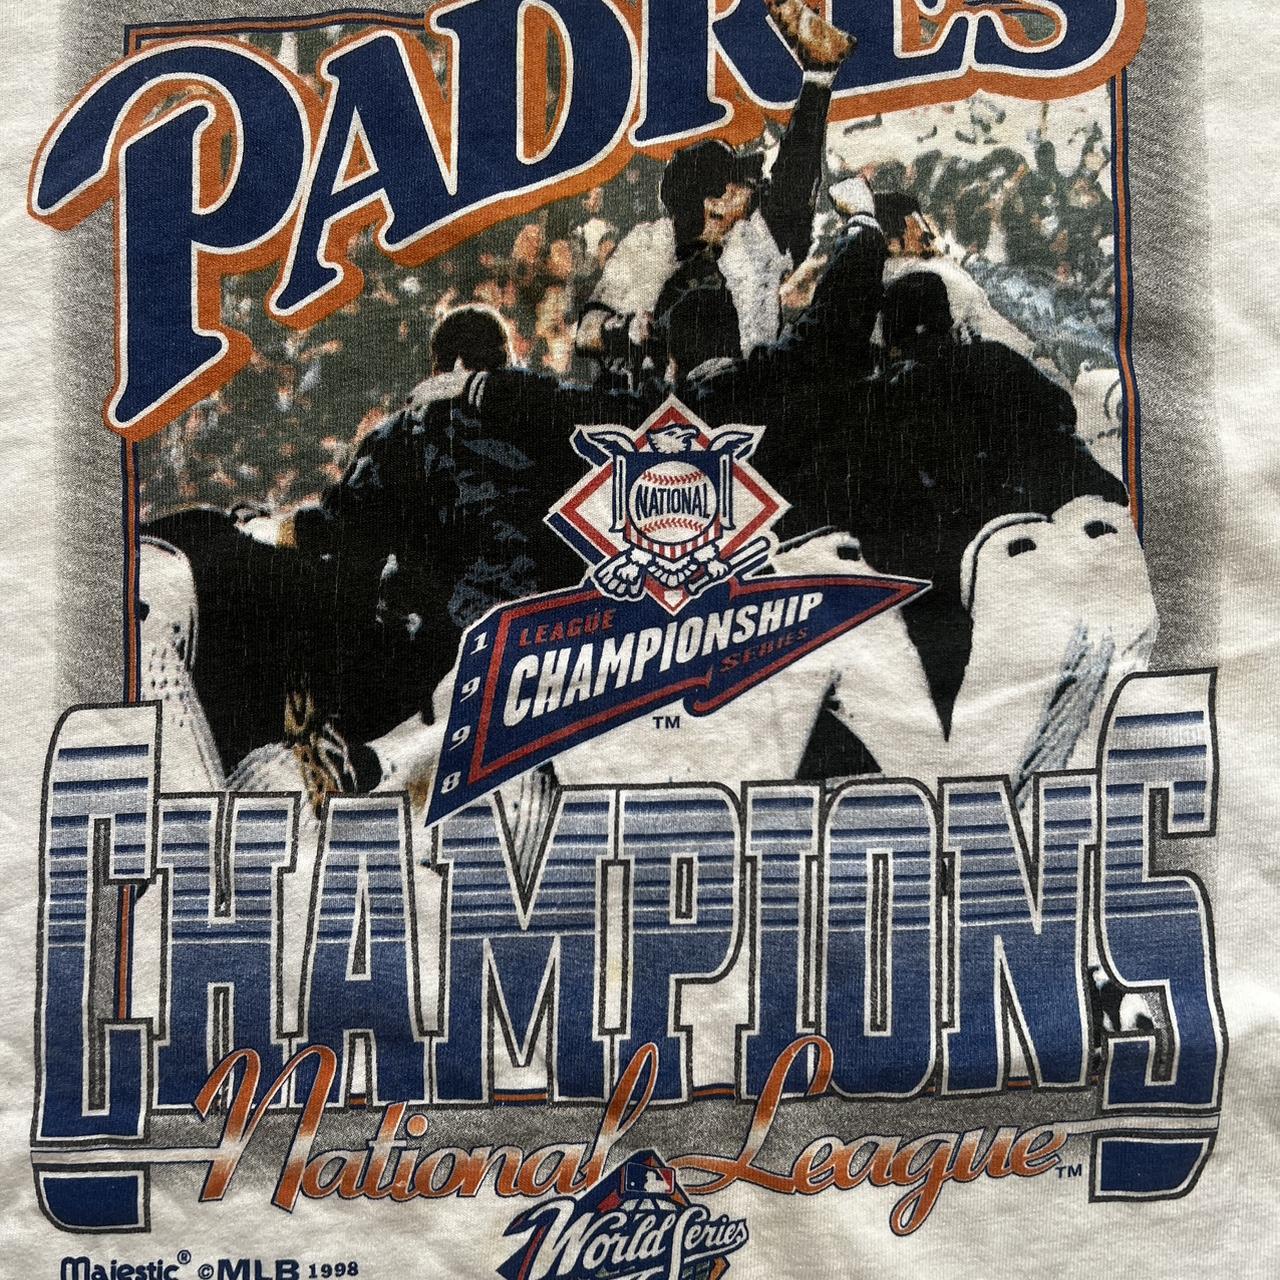 Vintage 1998 San Diego Padres National League Champions 